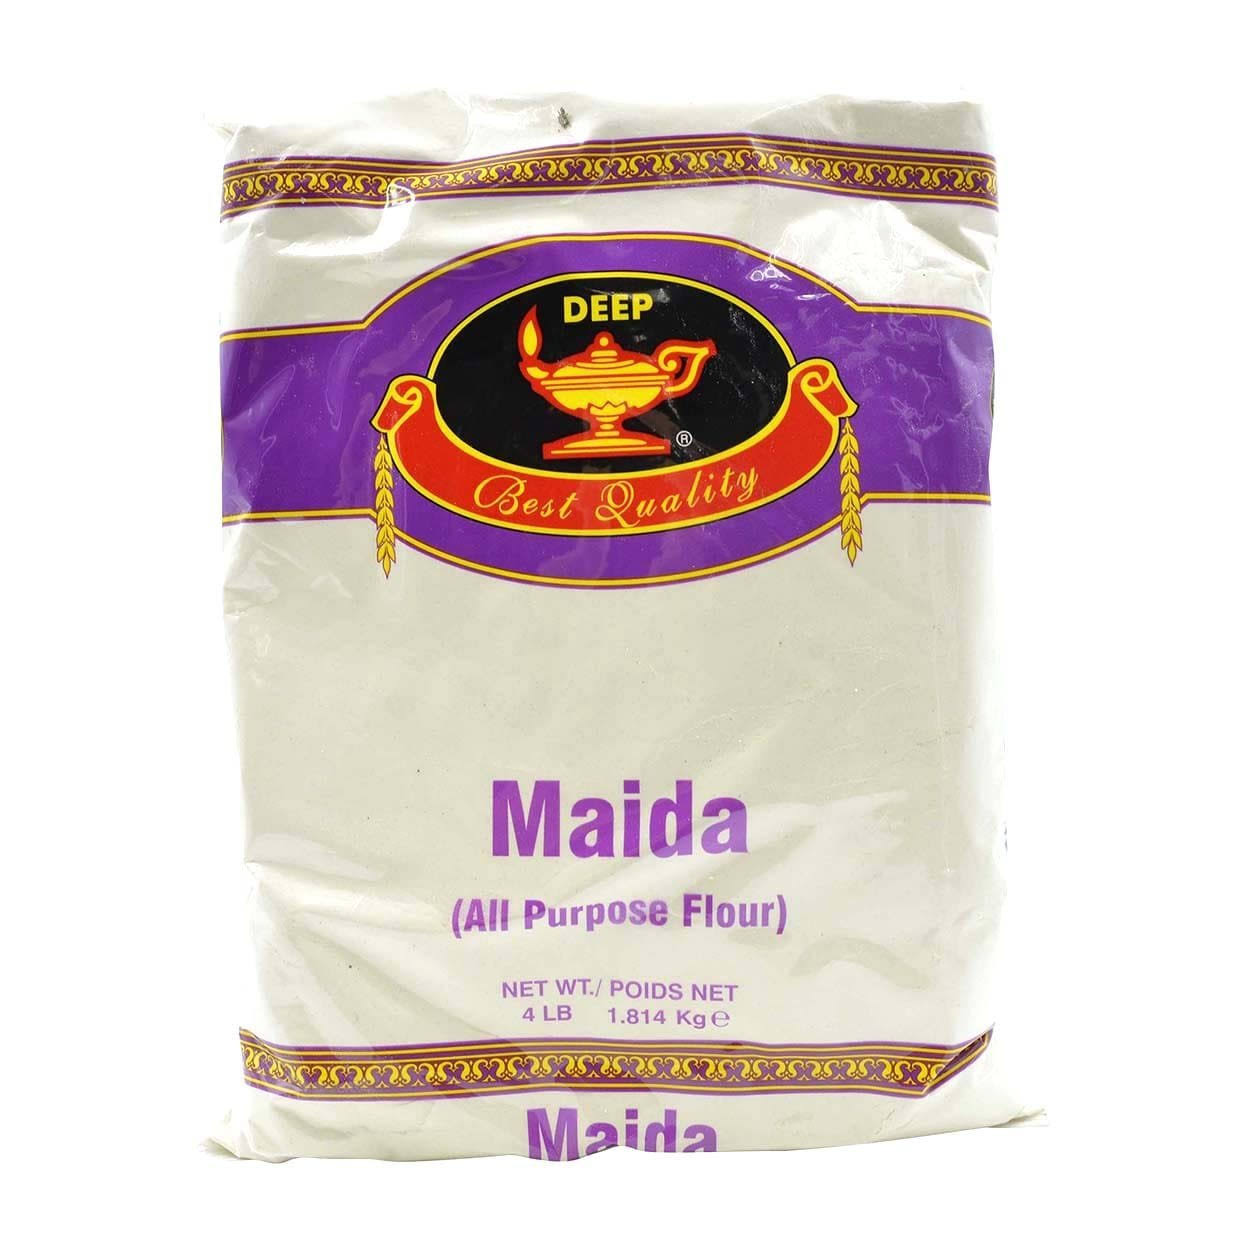 Deep Best Quality Maida (All Purpose Flour) - 4 lb